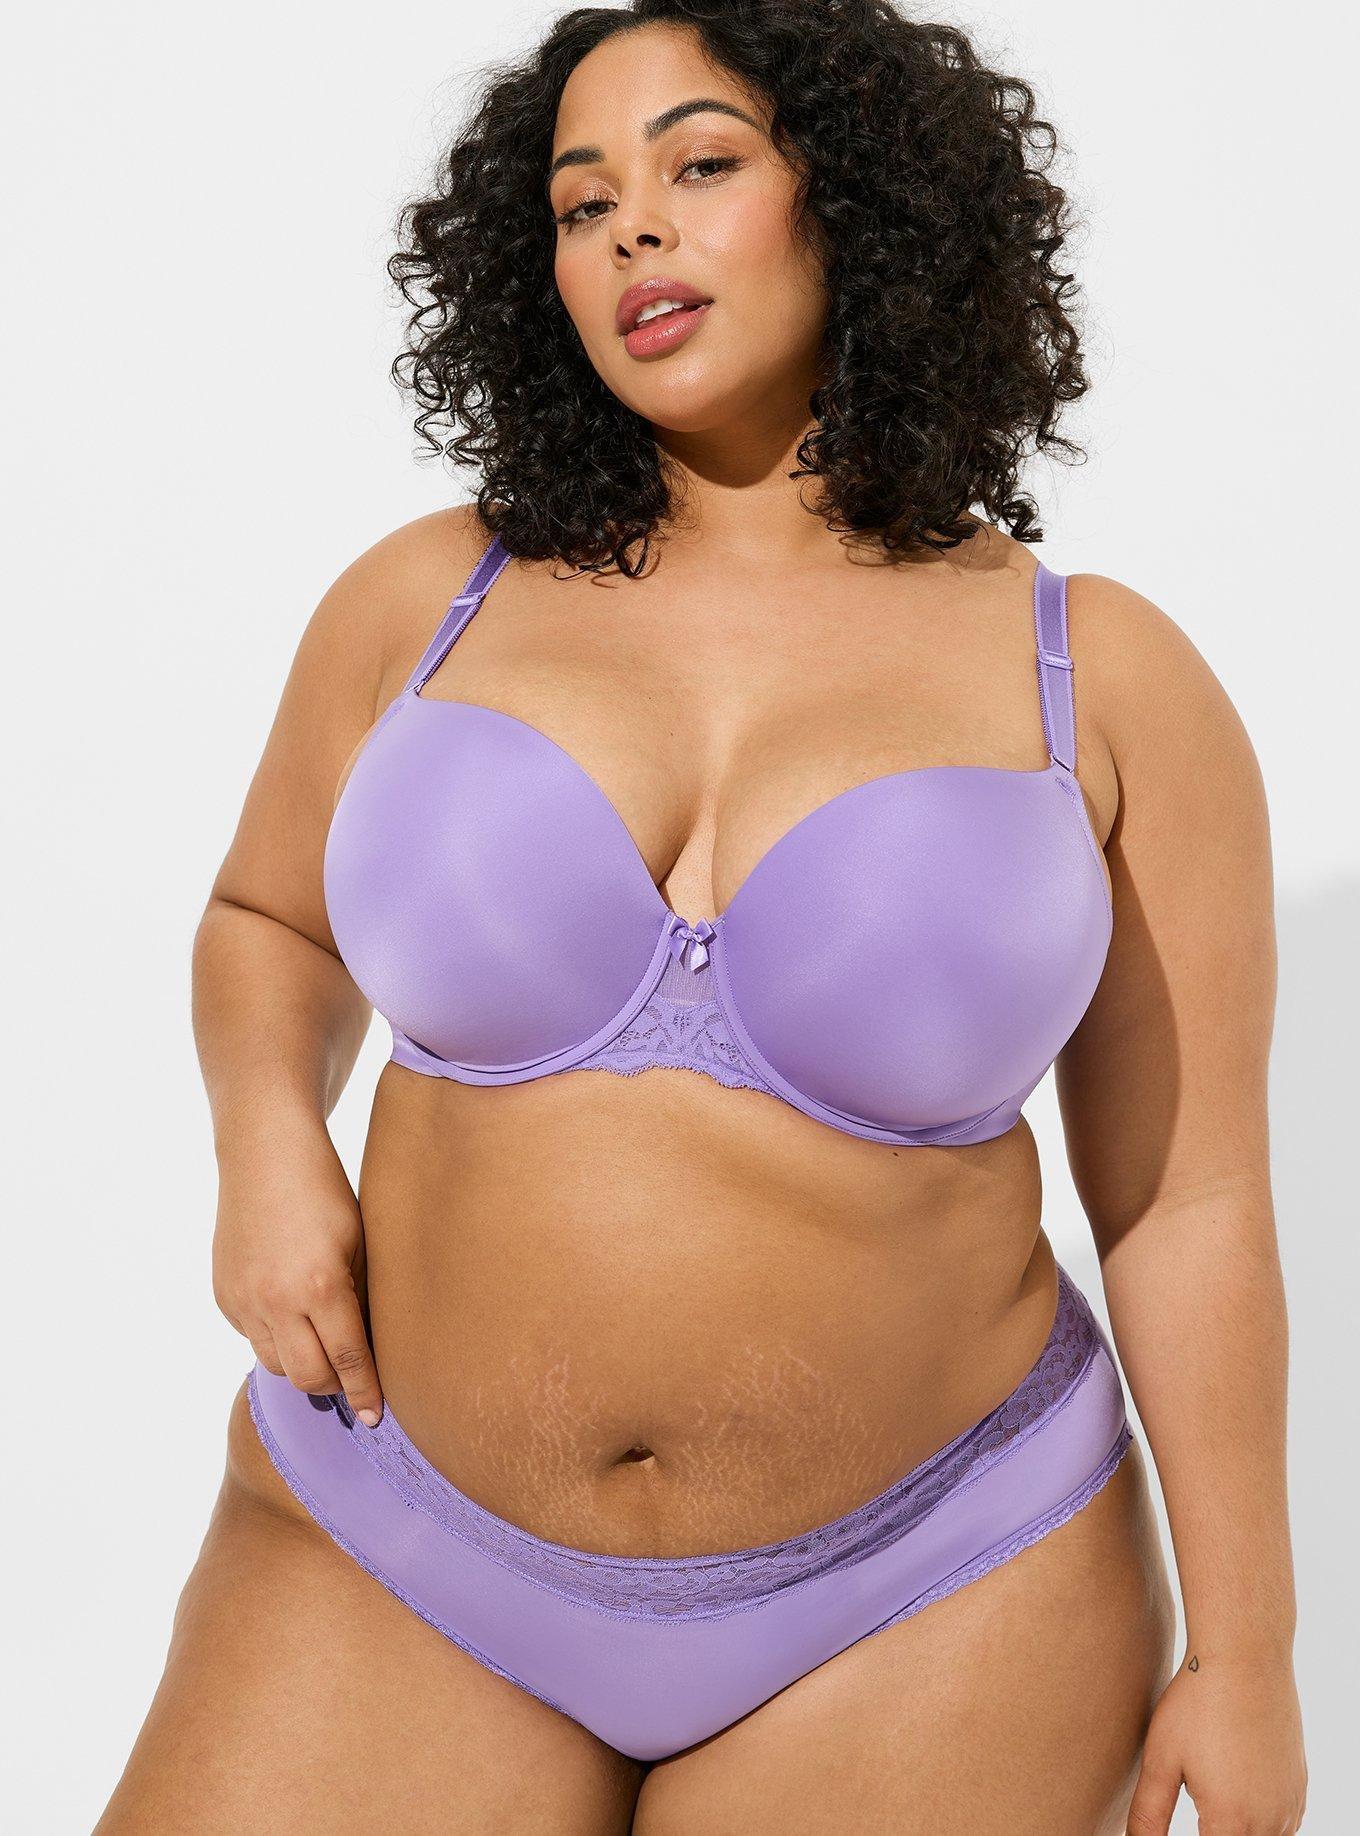 Torrid Purple Galaxy Bralette & Lattice Back Hipst Panty Set Plus Size 3X,  22/24